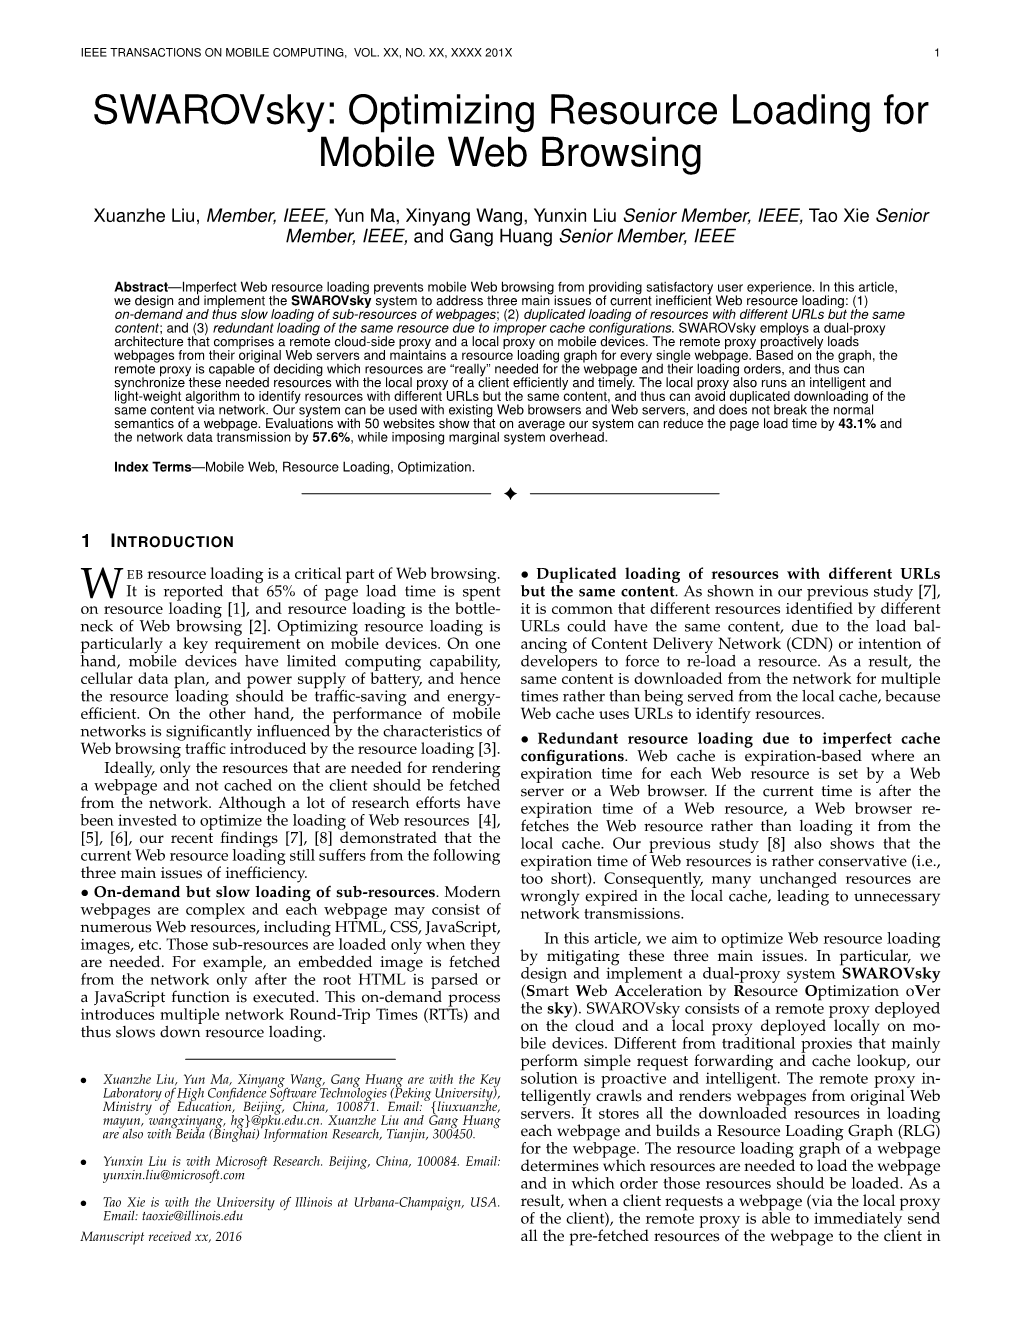 Swarovsky: Optimizing Resource Loading for Mobile Web Browsing